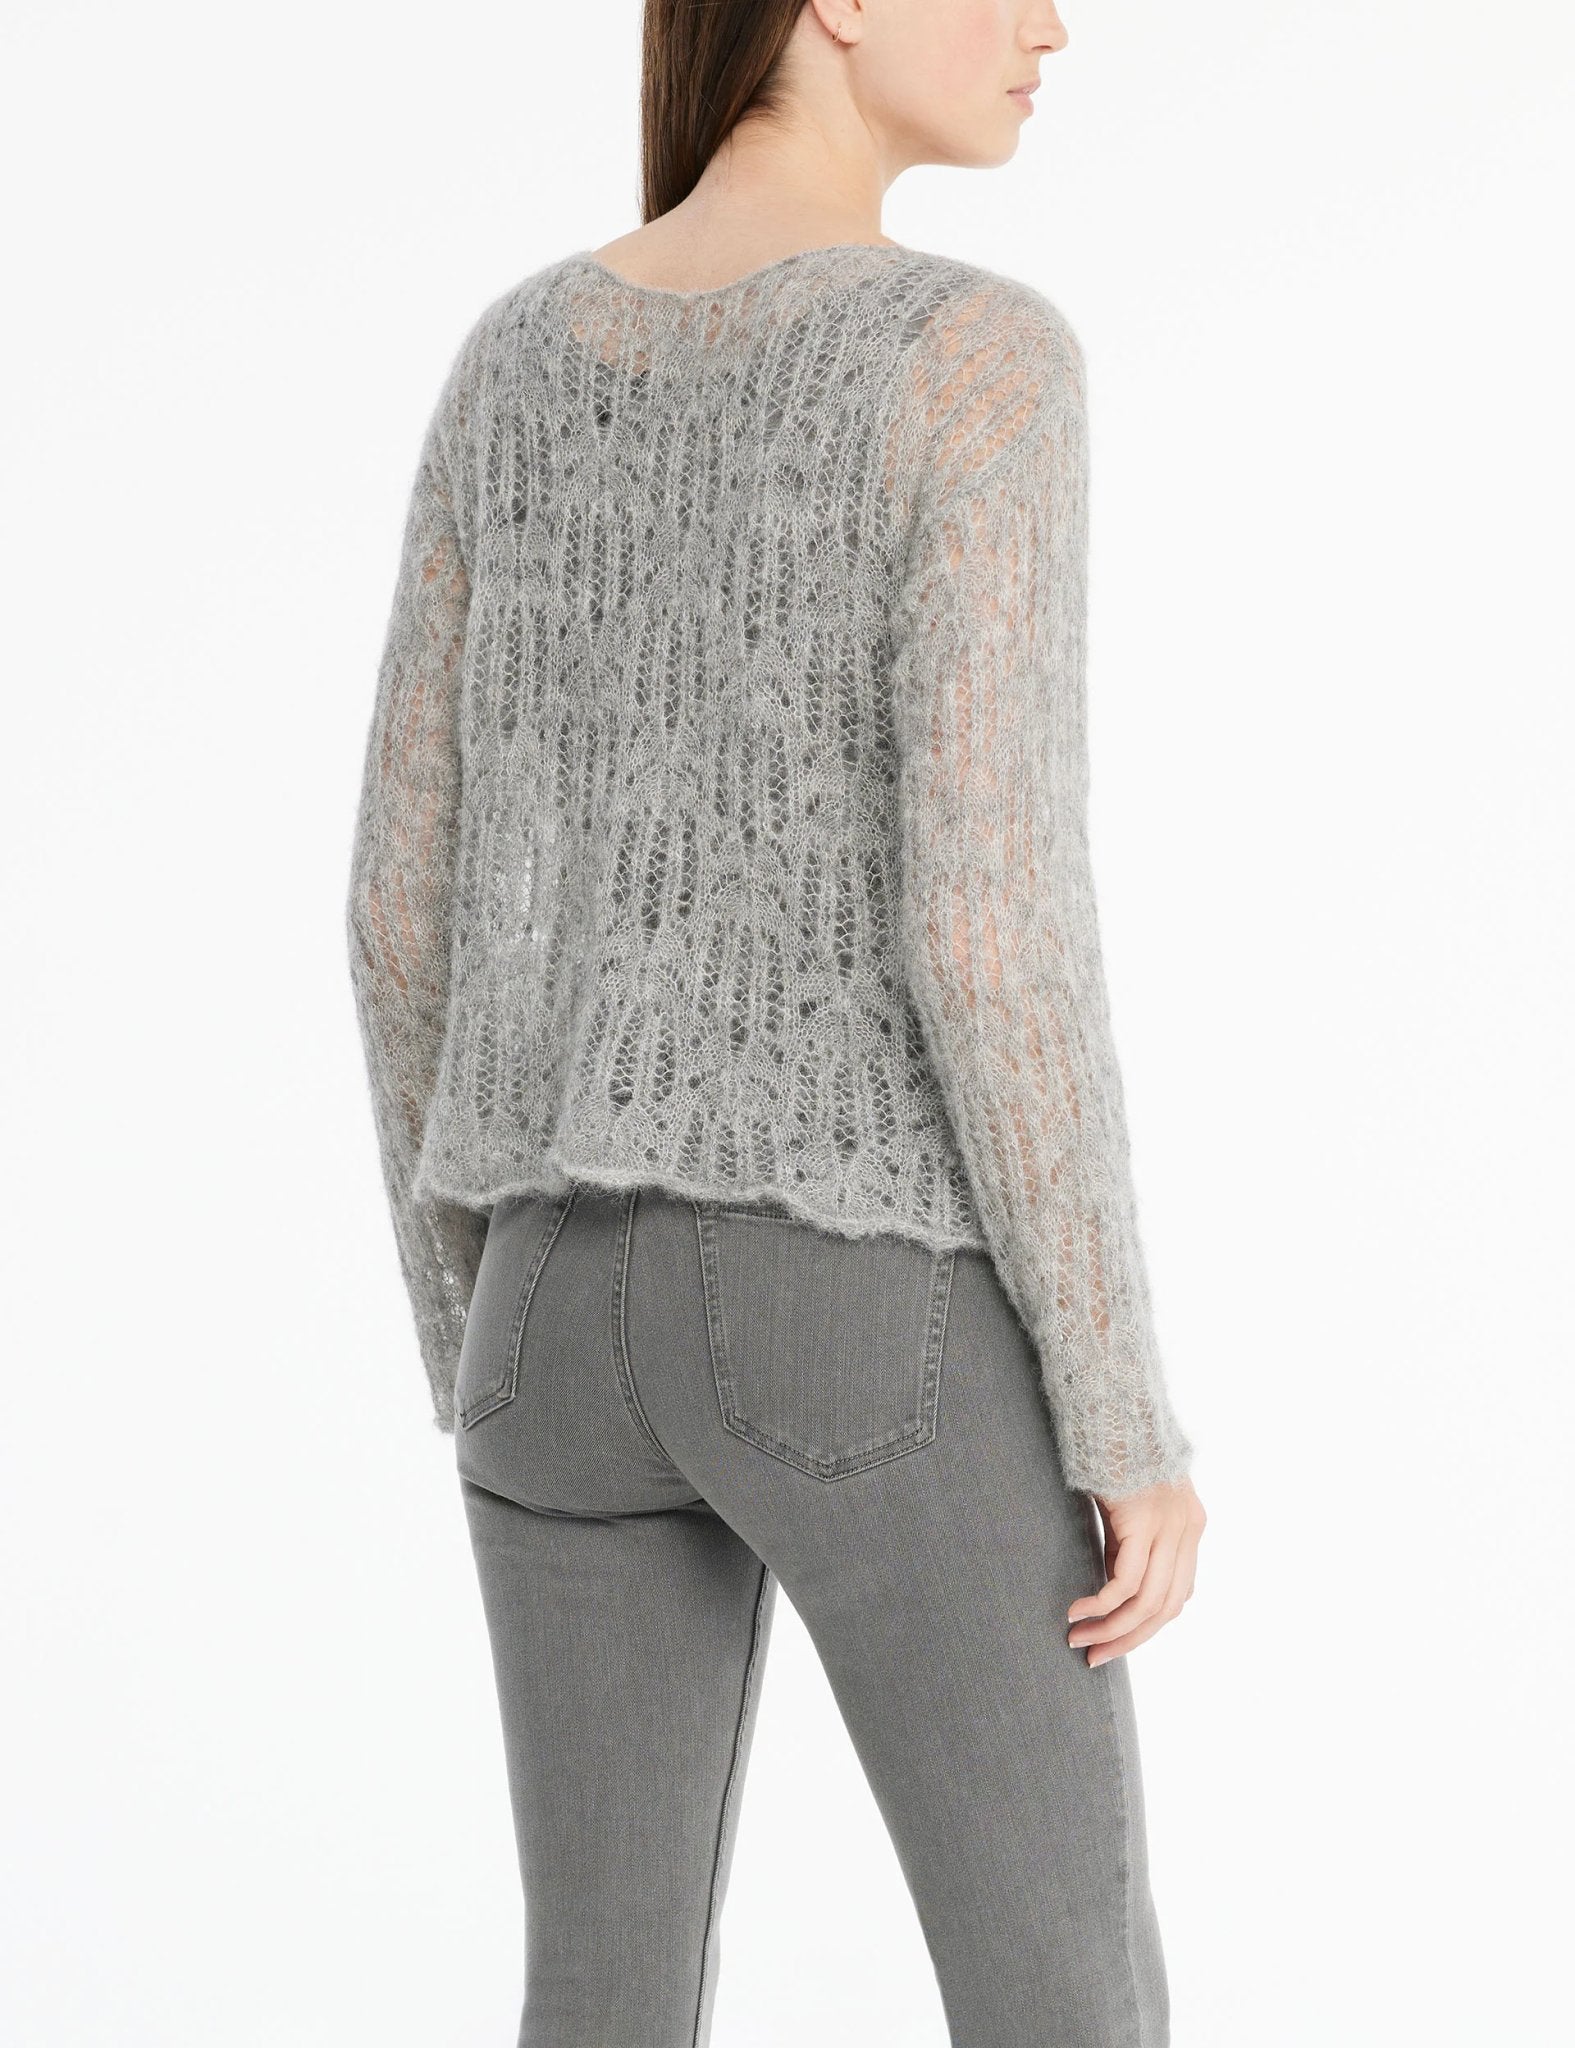 Lace Knit Sweater - Sarah Pacini - Danali - 232.11.058.08